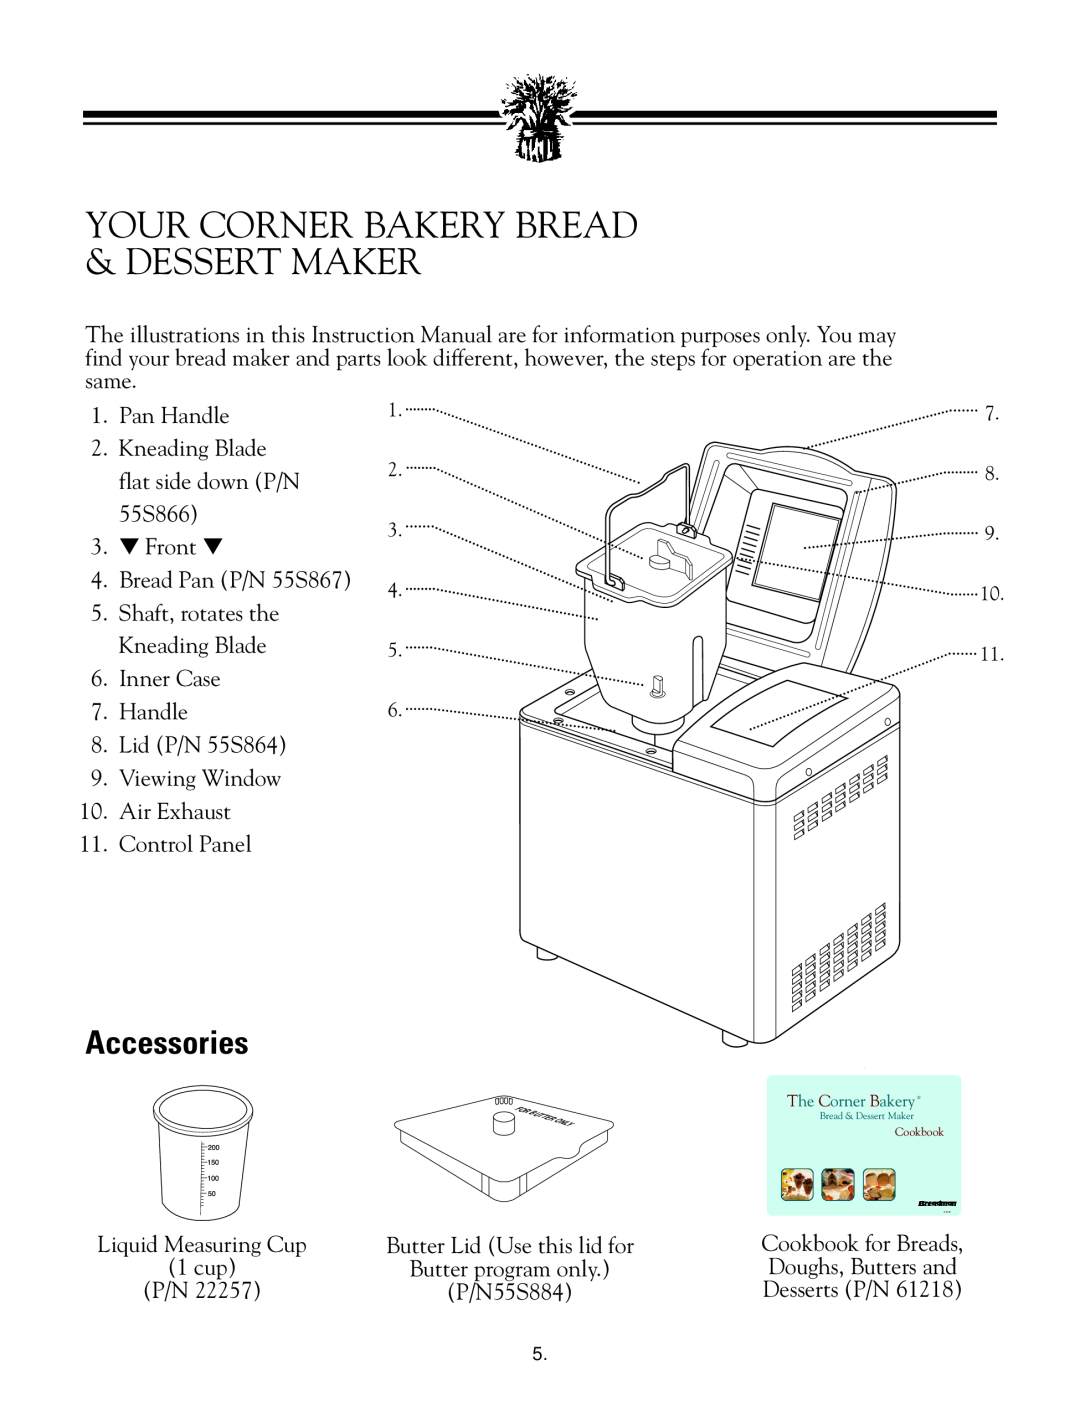 Breadman TR888 instruction manual Your Corner Bakery Bread & Dessert Maker, Accessories 